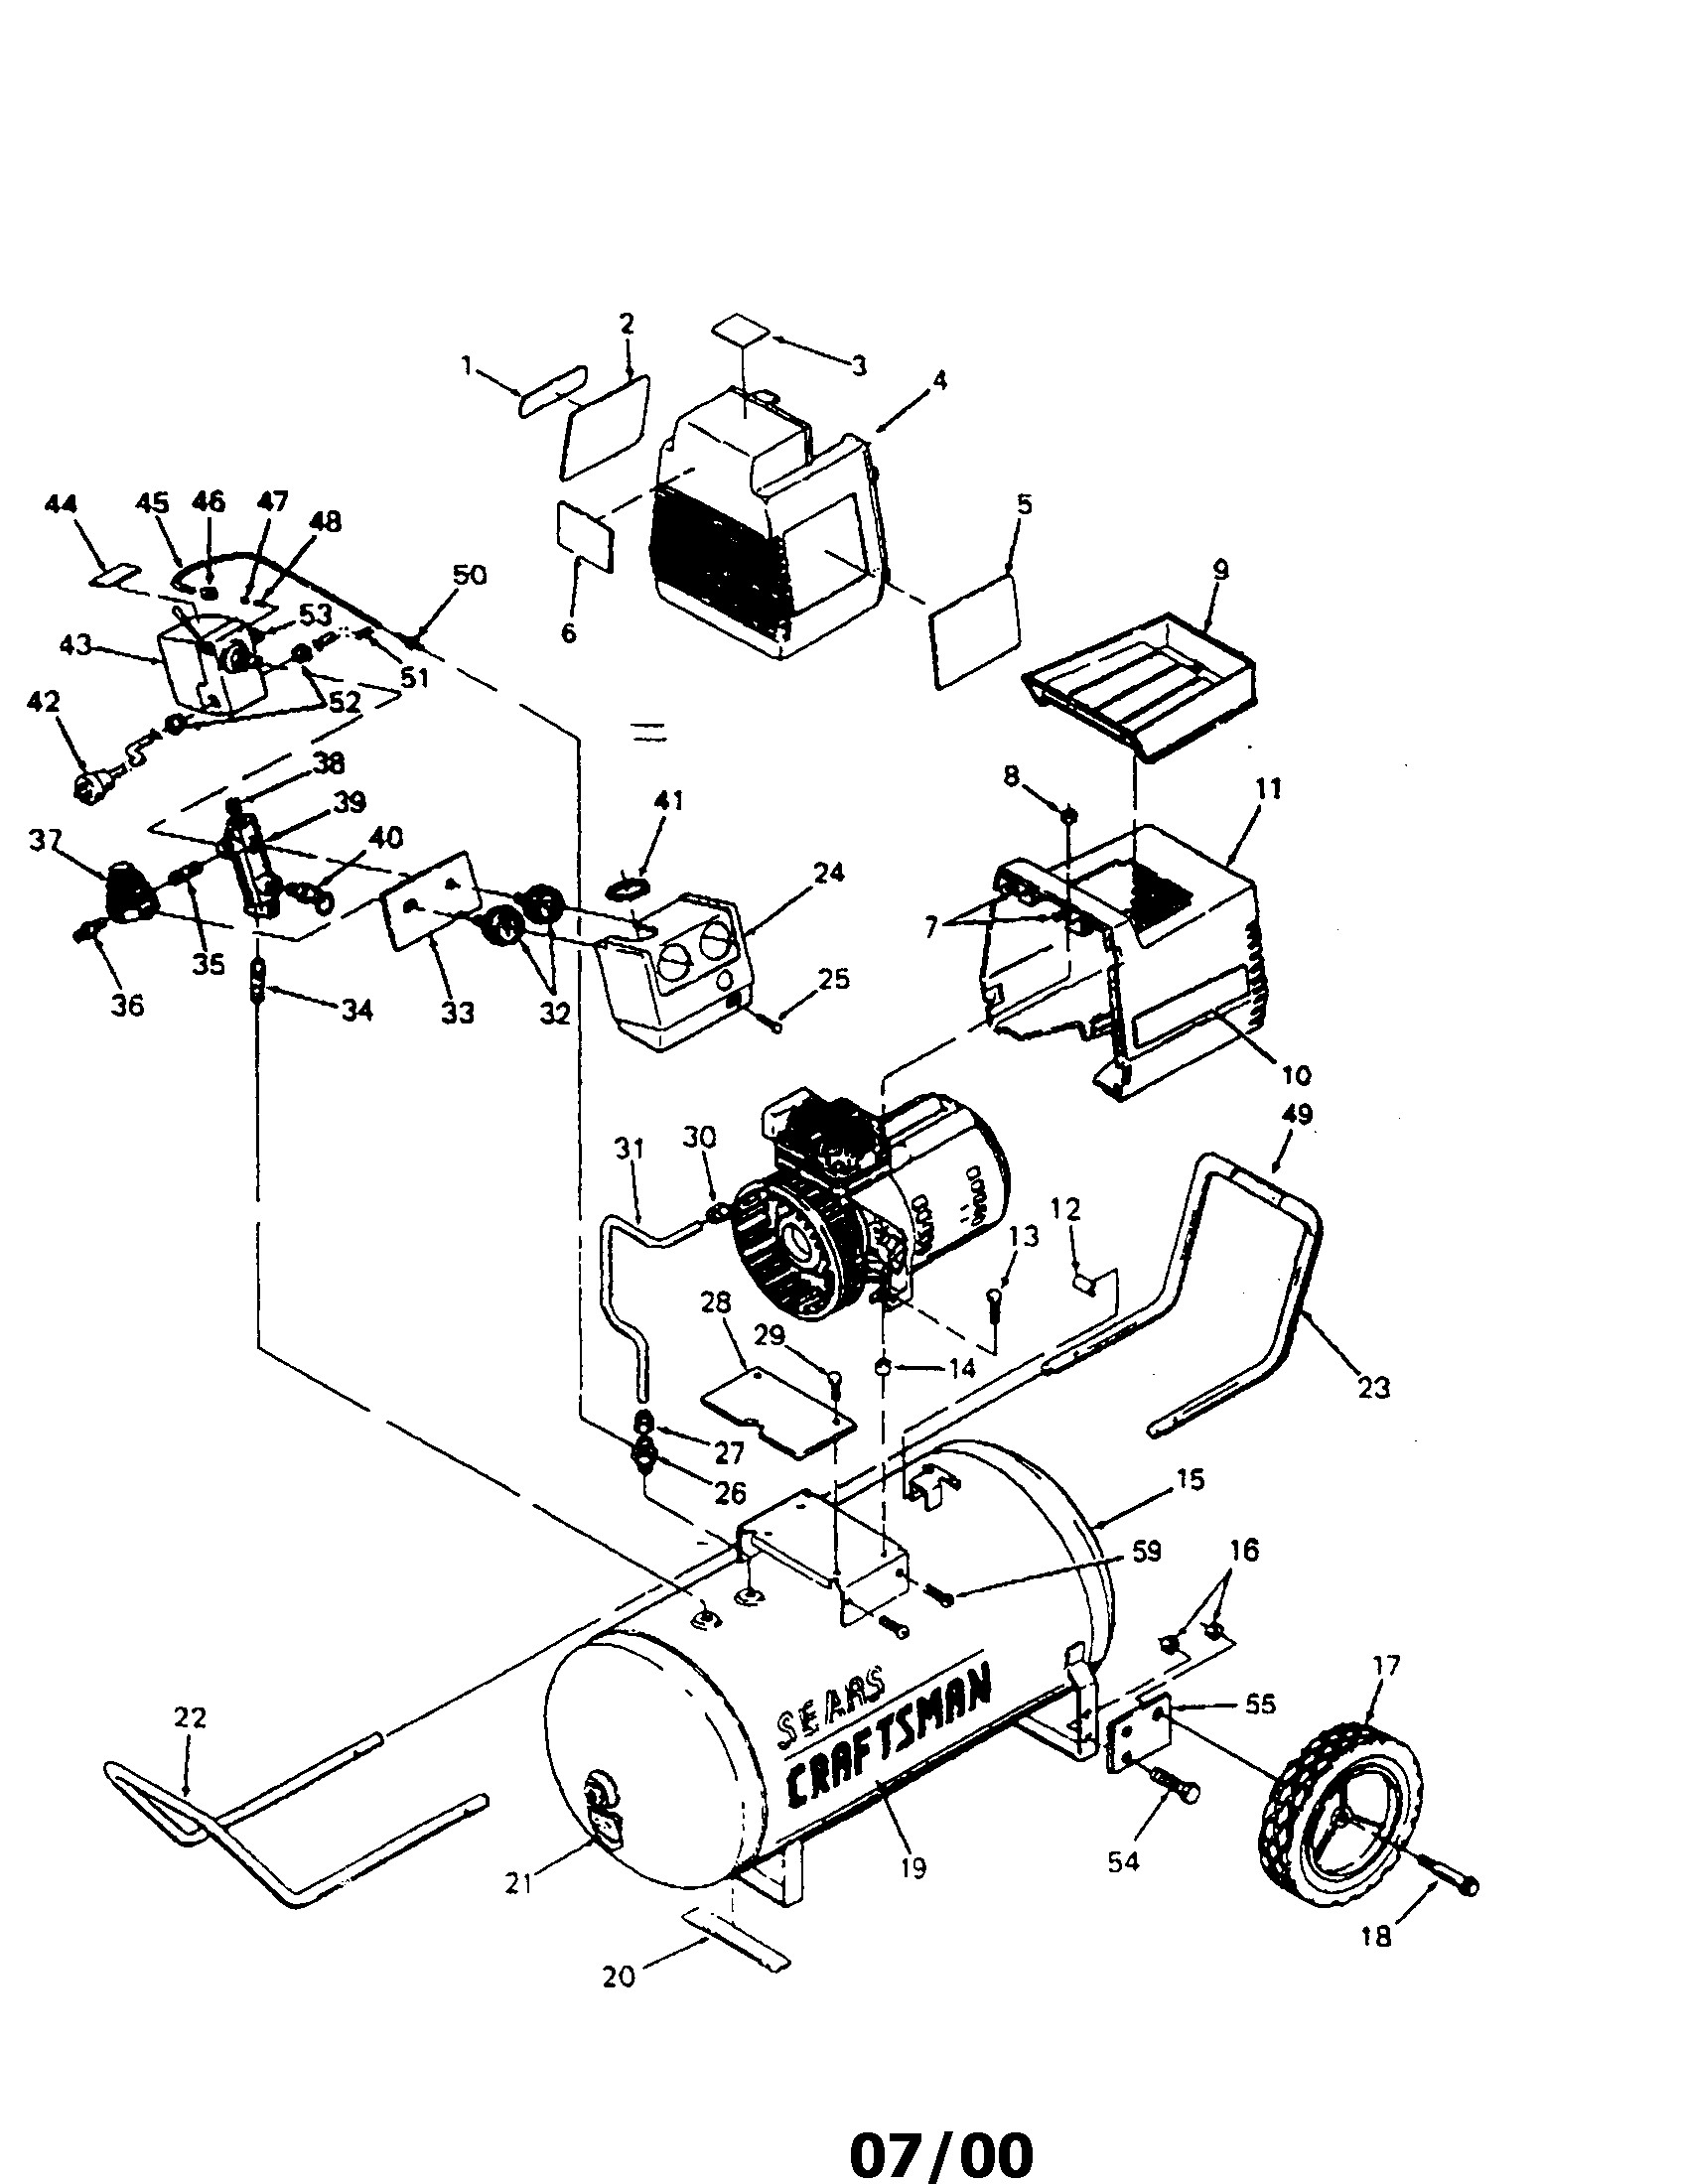 Bostitch Air Compressor Parts Diagram Sears Craftsman 919 Air Pressor Parts Of Bostitch Air Compressor Parts Diagram